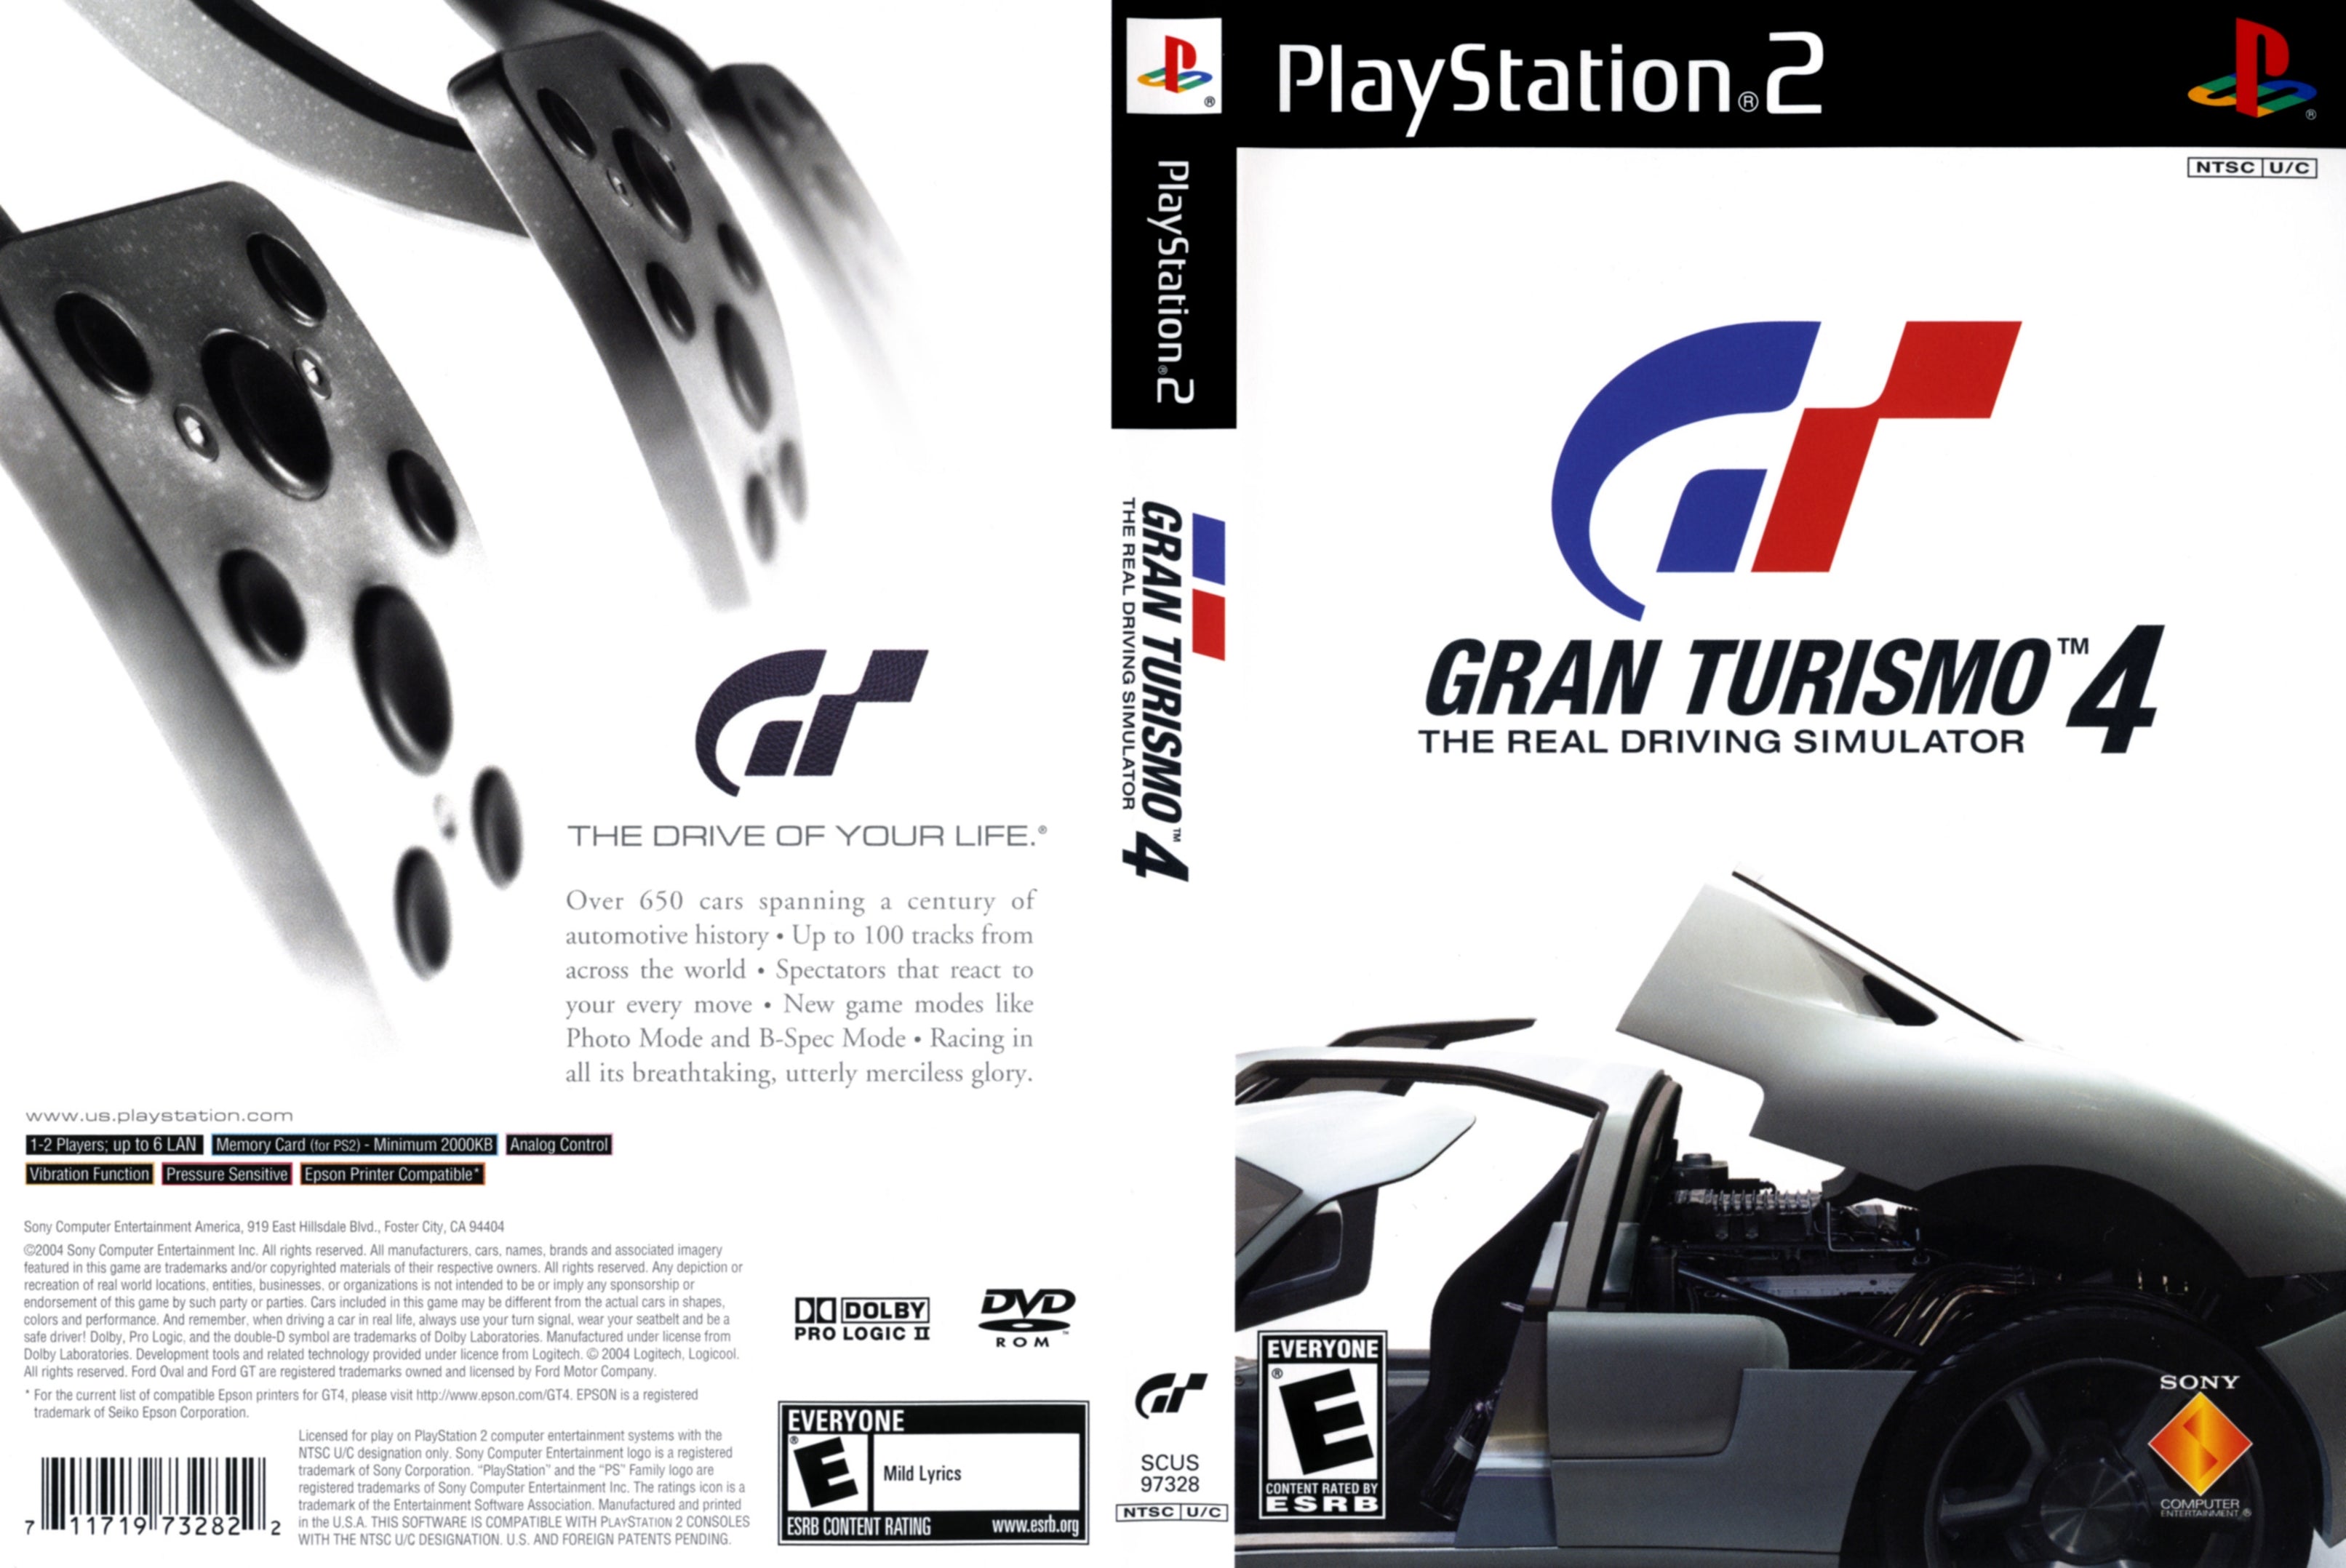 Gran Turismo 1 (PS1) NTSC (USA Version) - All New Cars - Full HD